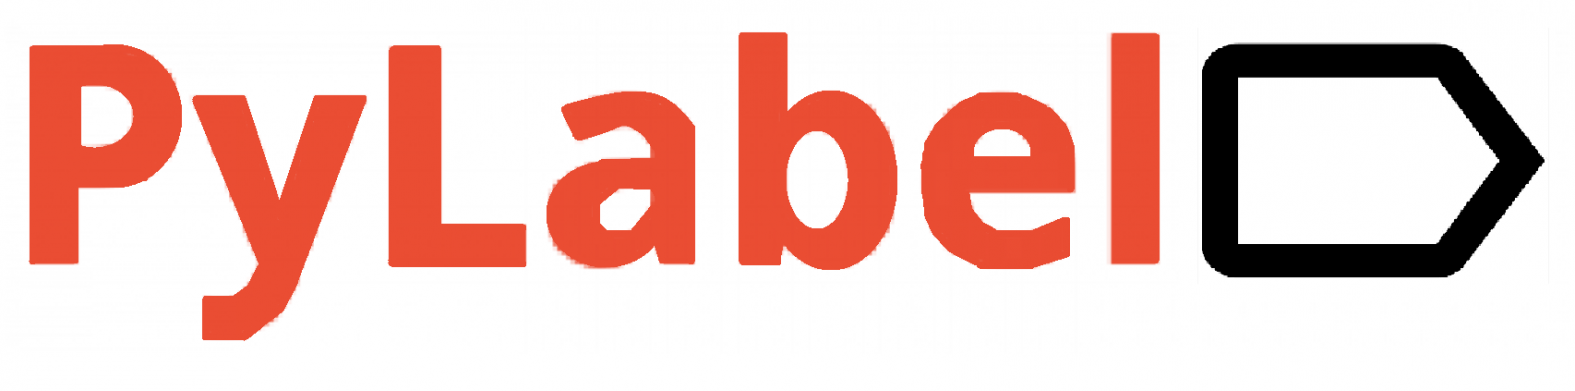 PyLabel Logo